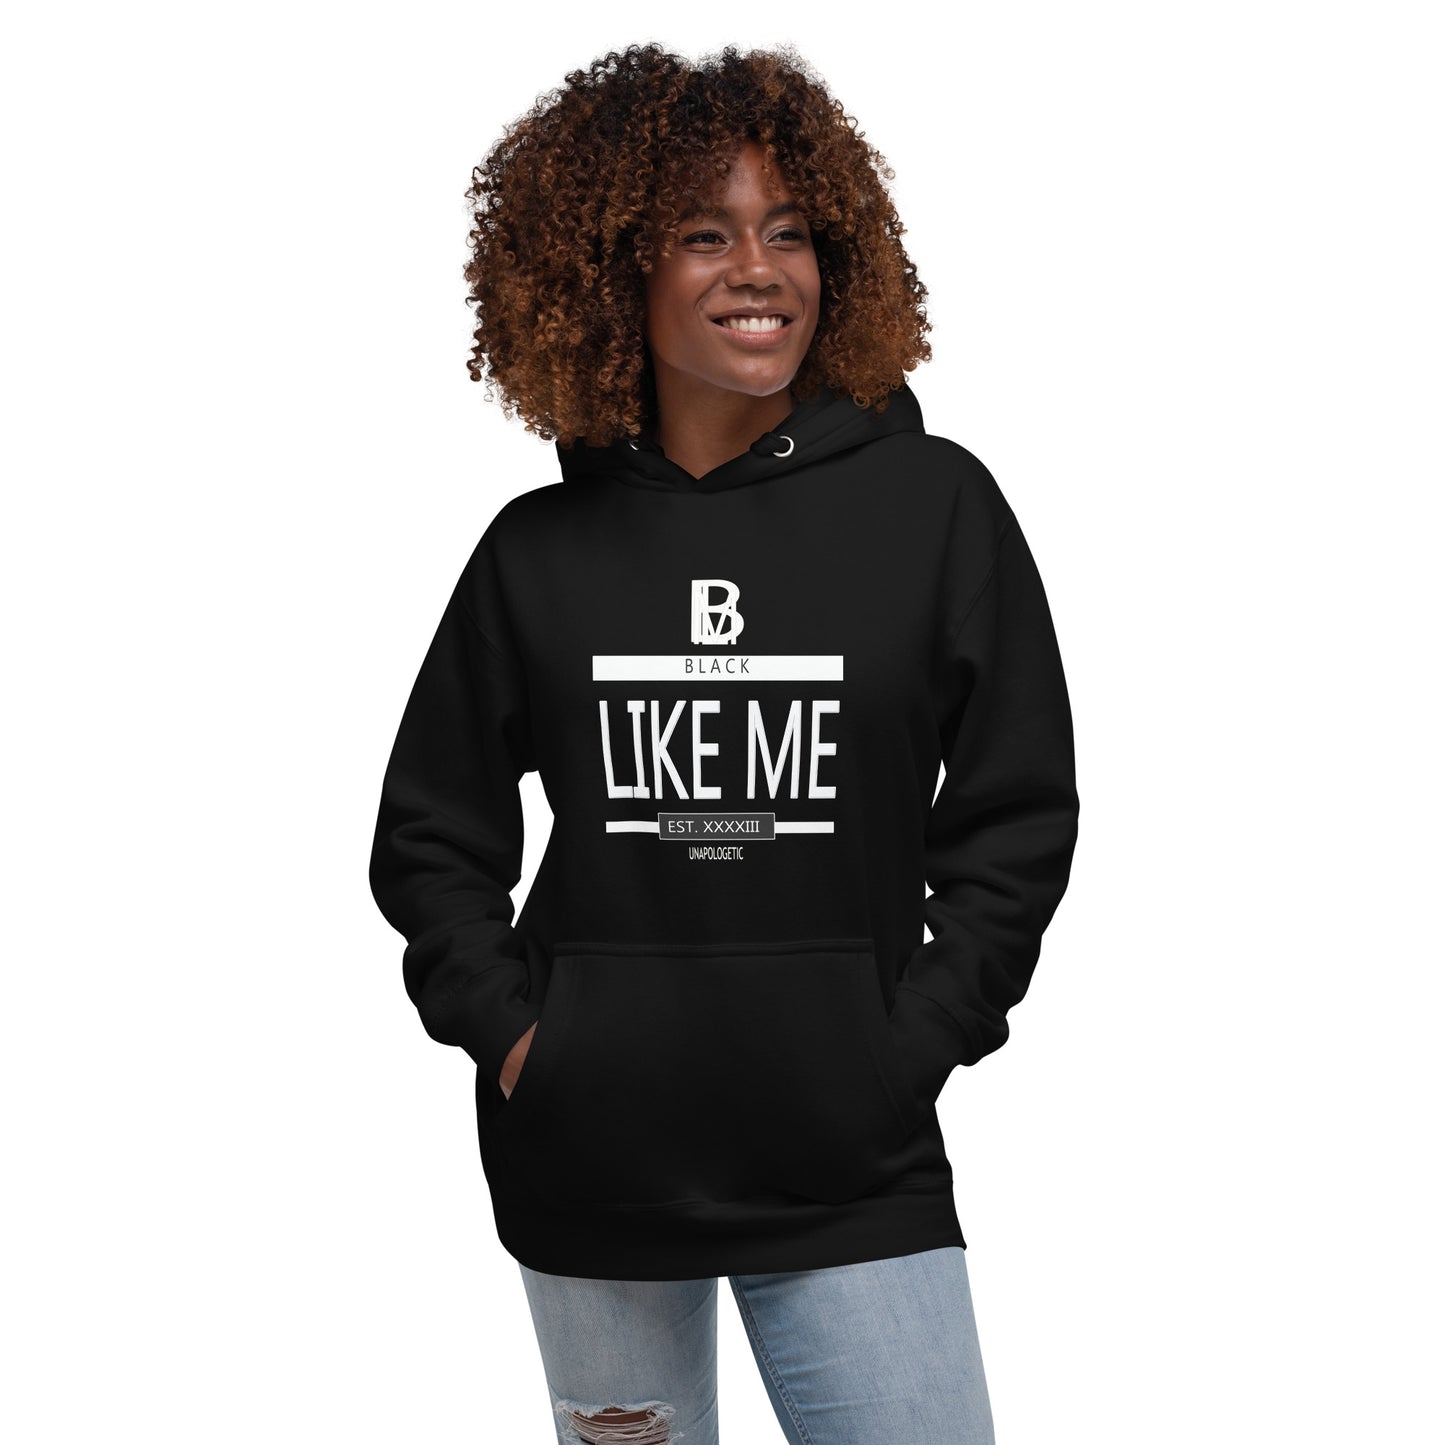 Black Like Me Elite "Black Excellence" Unisex Hoodie